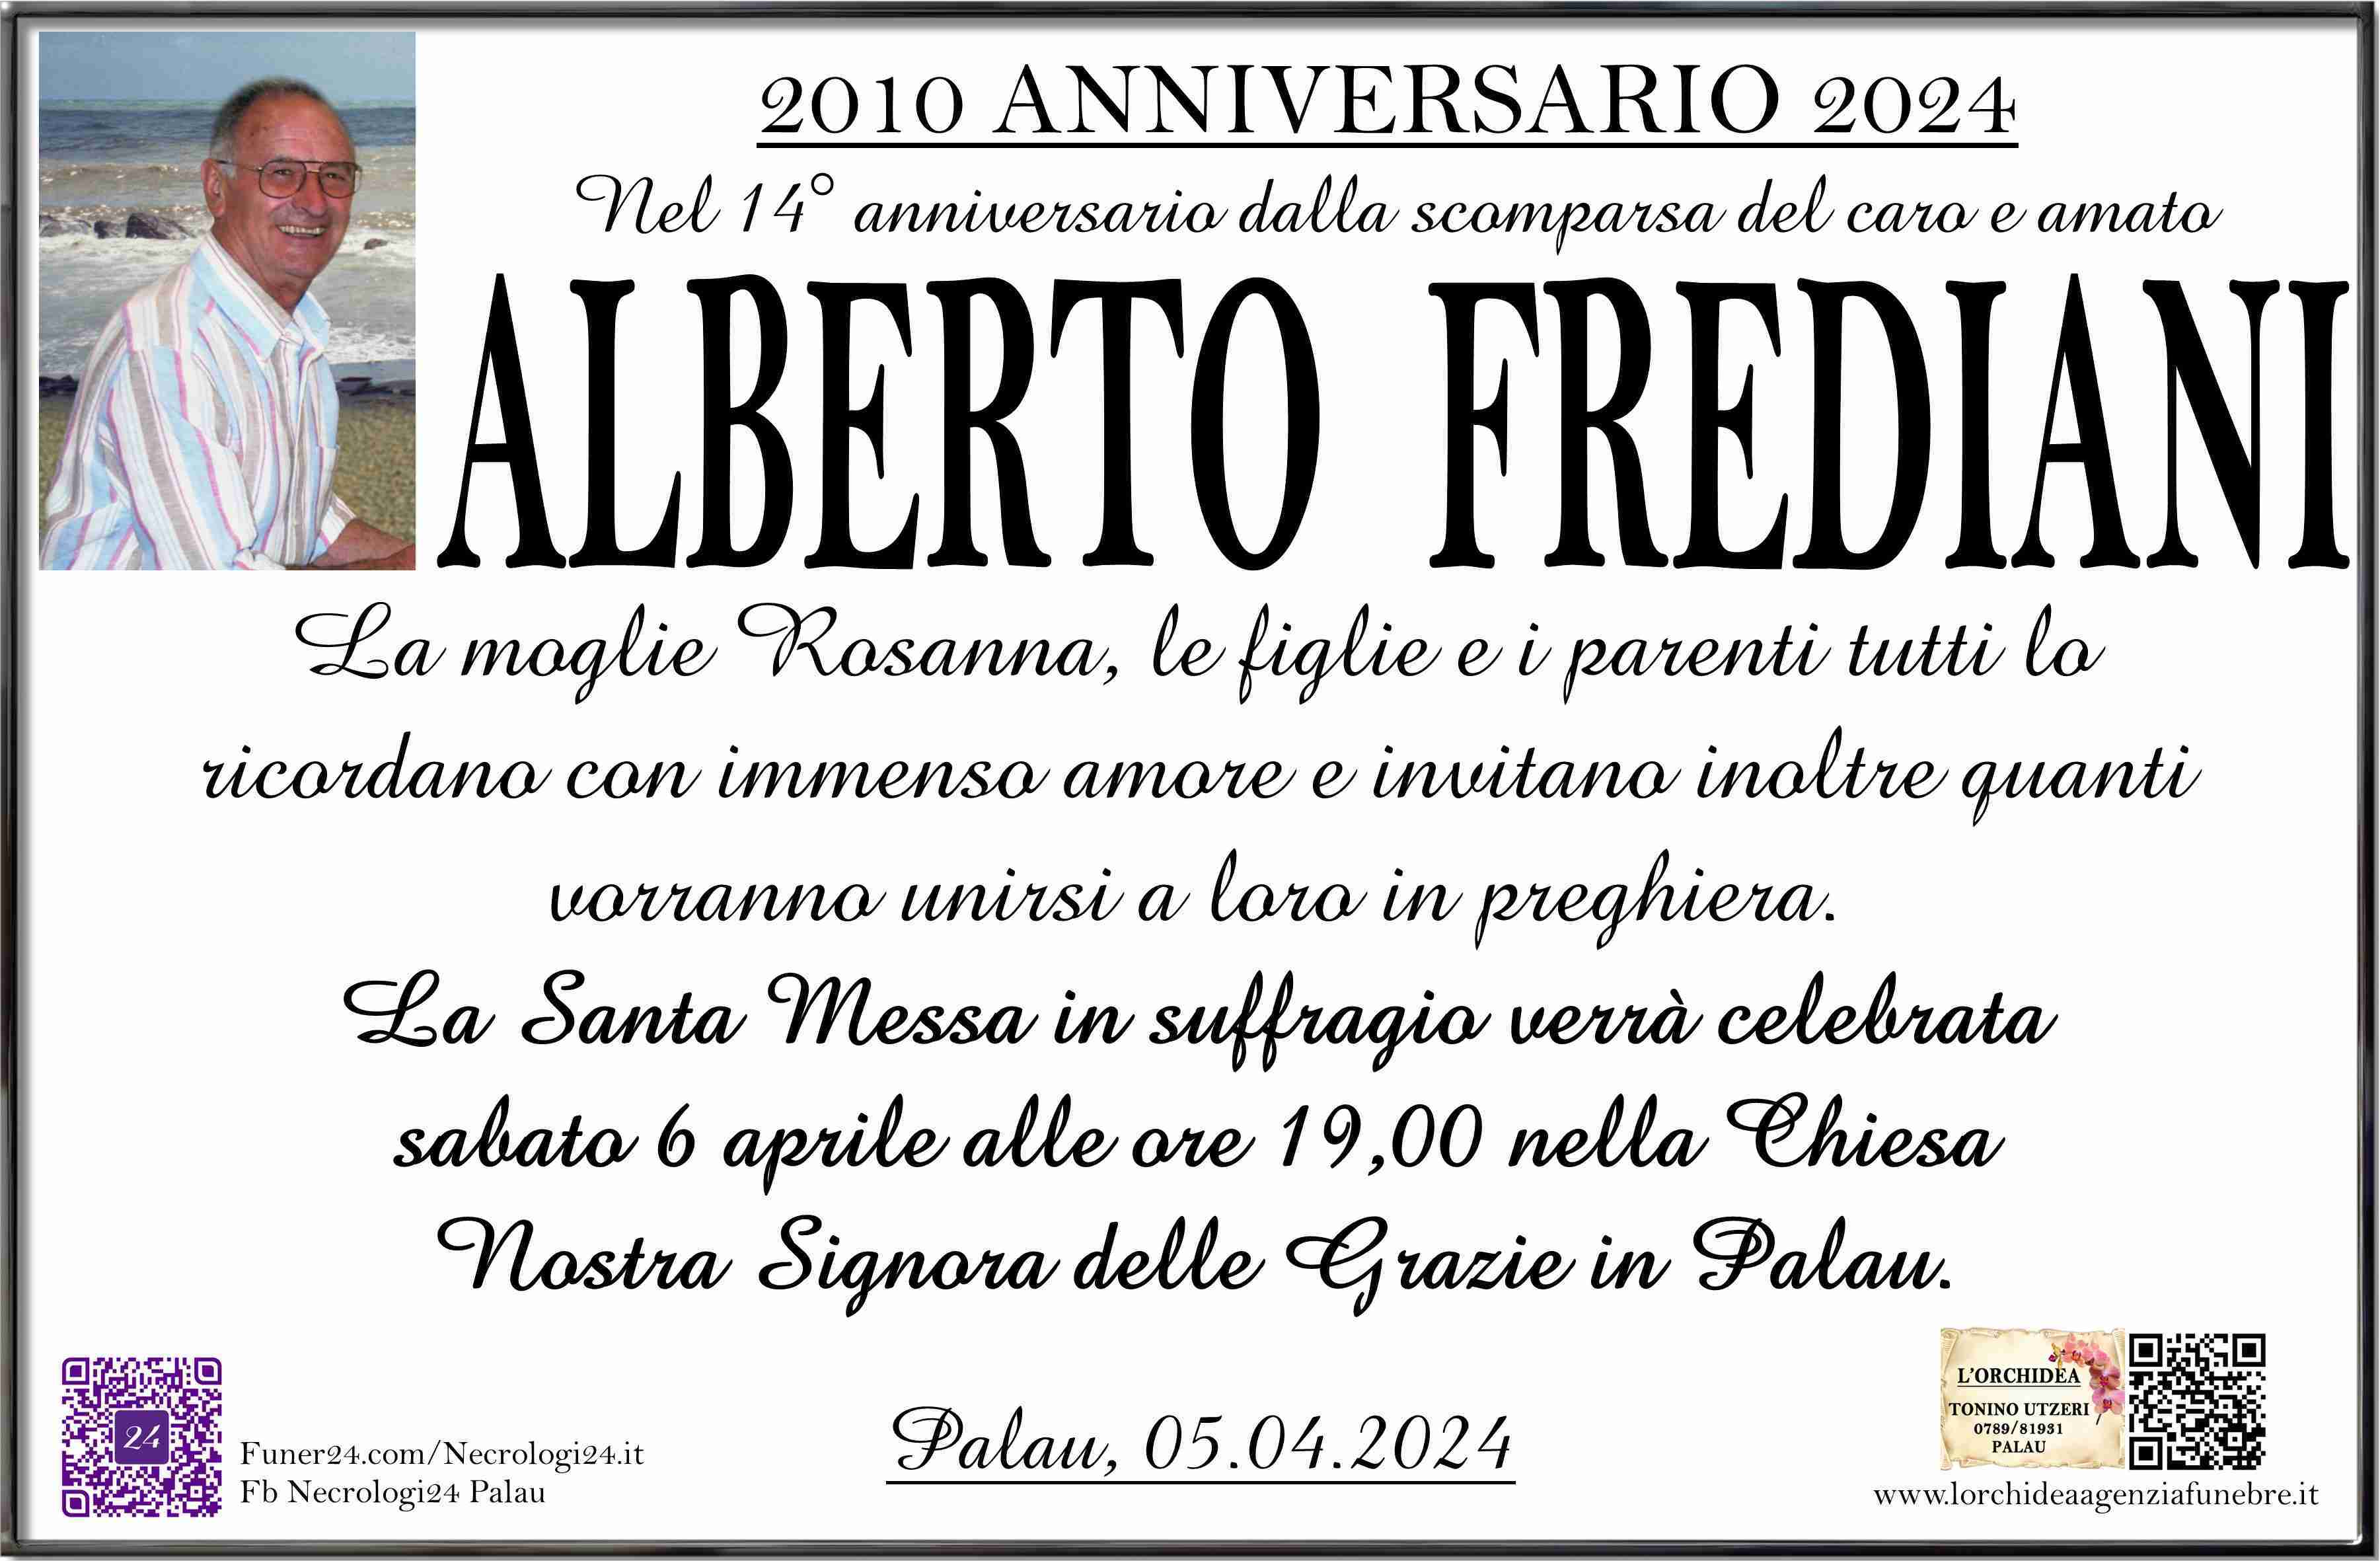 Alberto Frediani